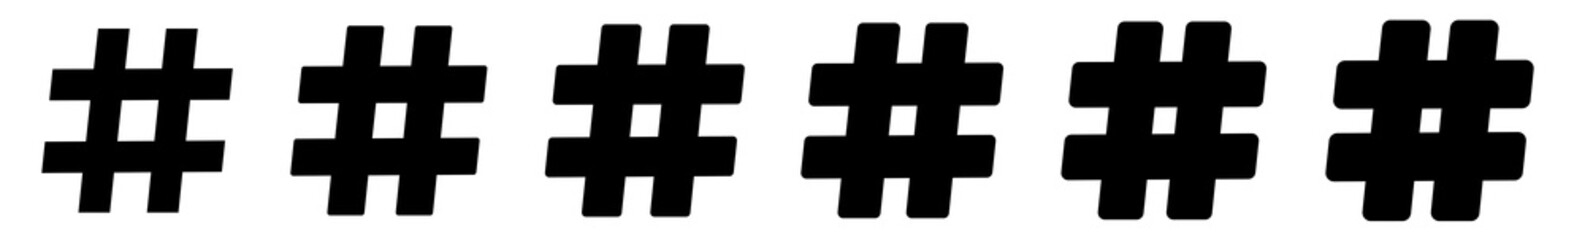 Hashtag Icon Set | Hashtag Vector Logo | Hash Tag Isolated